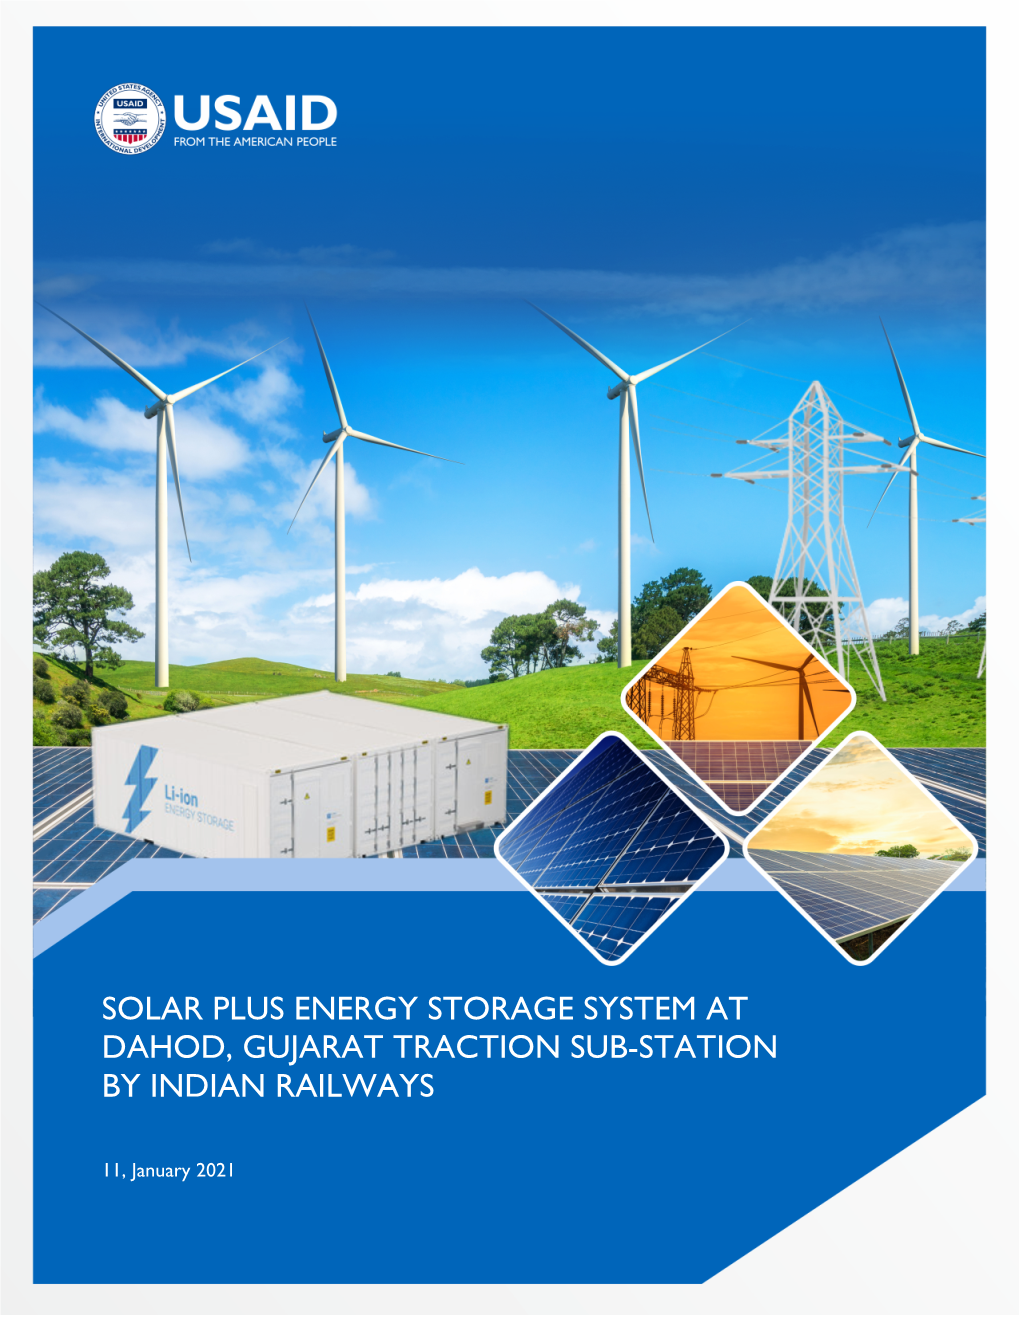 Solar Plus Energy Storage System at Dahod, Gujarat Traction Sub-Station by Indian Railways